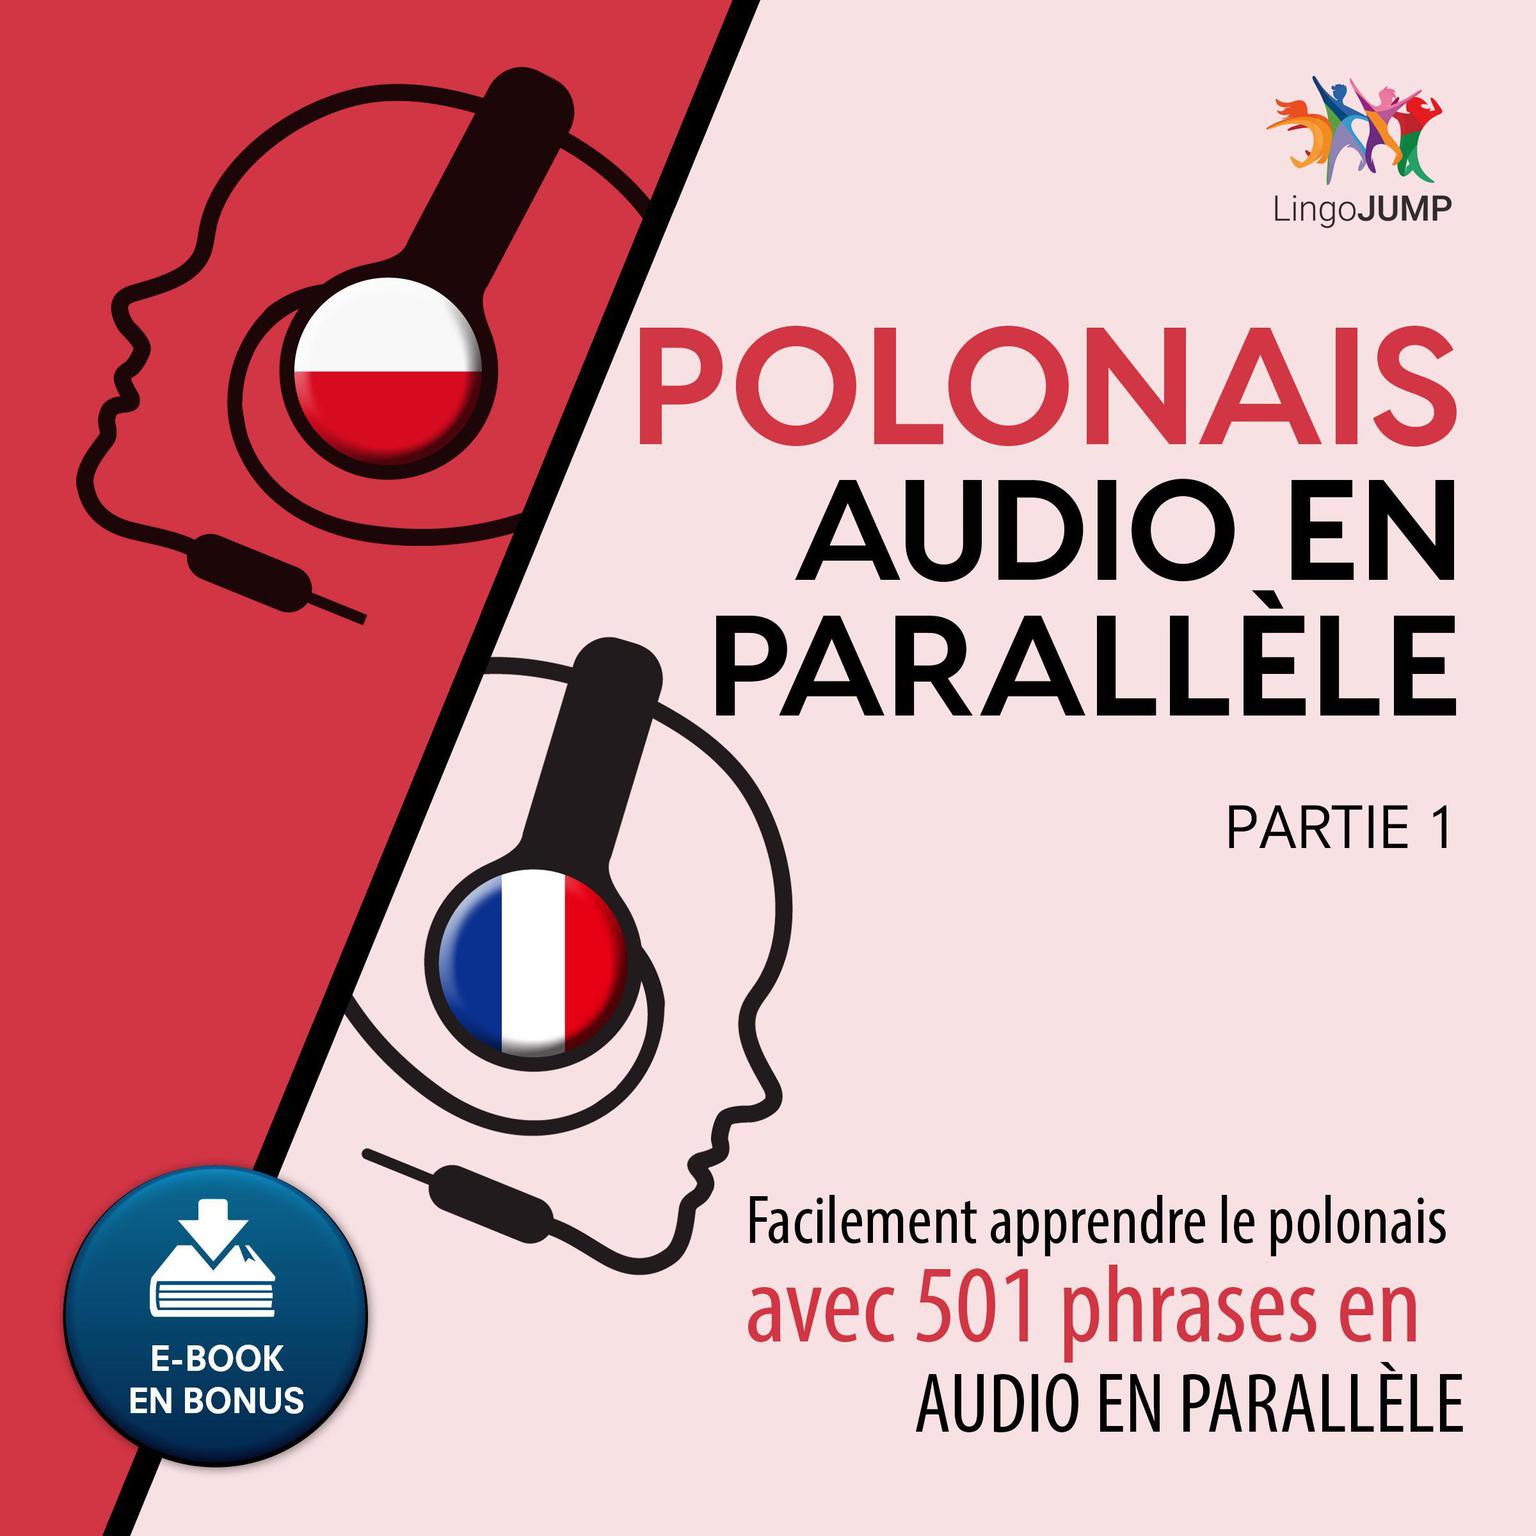 Polonais audio en parallle - Facilement apprendre lepolonaisavec 501 phrases en audio en parallle - Partie 1 Audiobook, by Lingo Jump